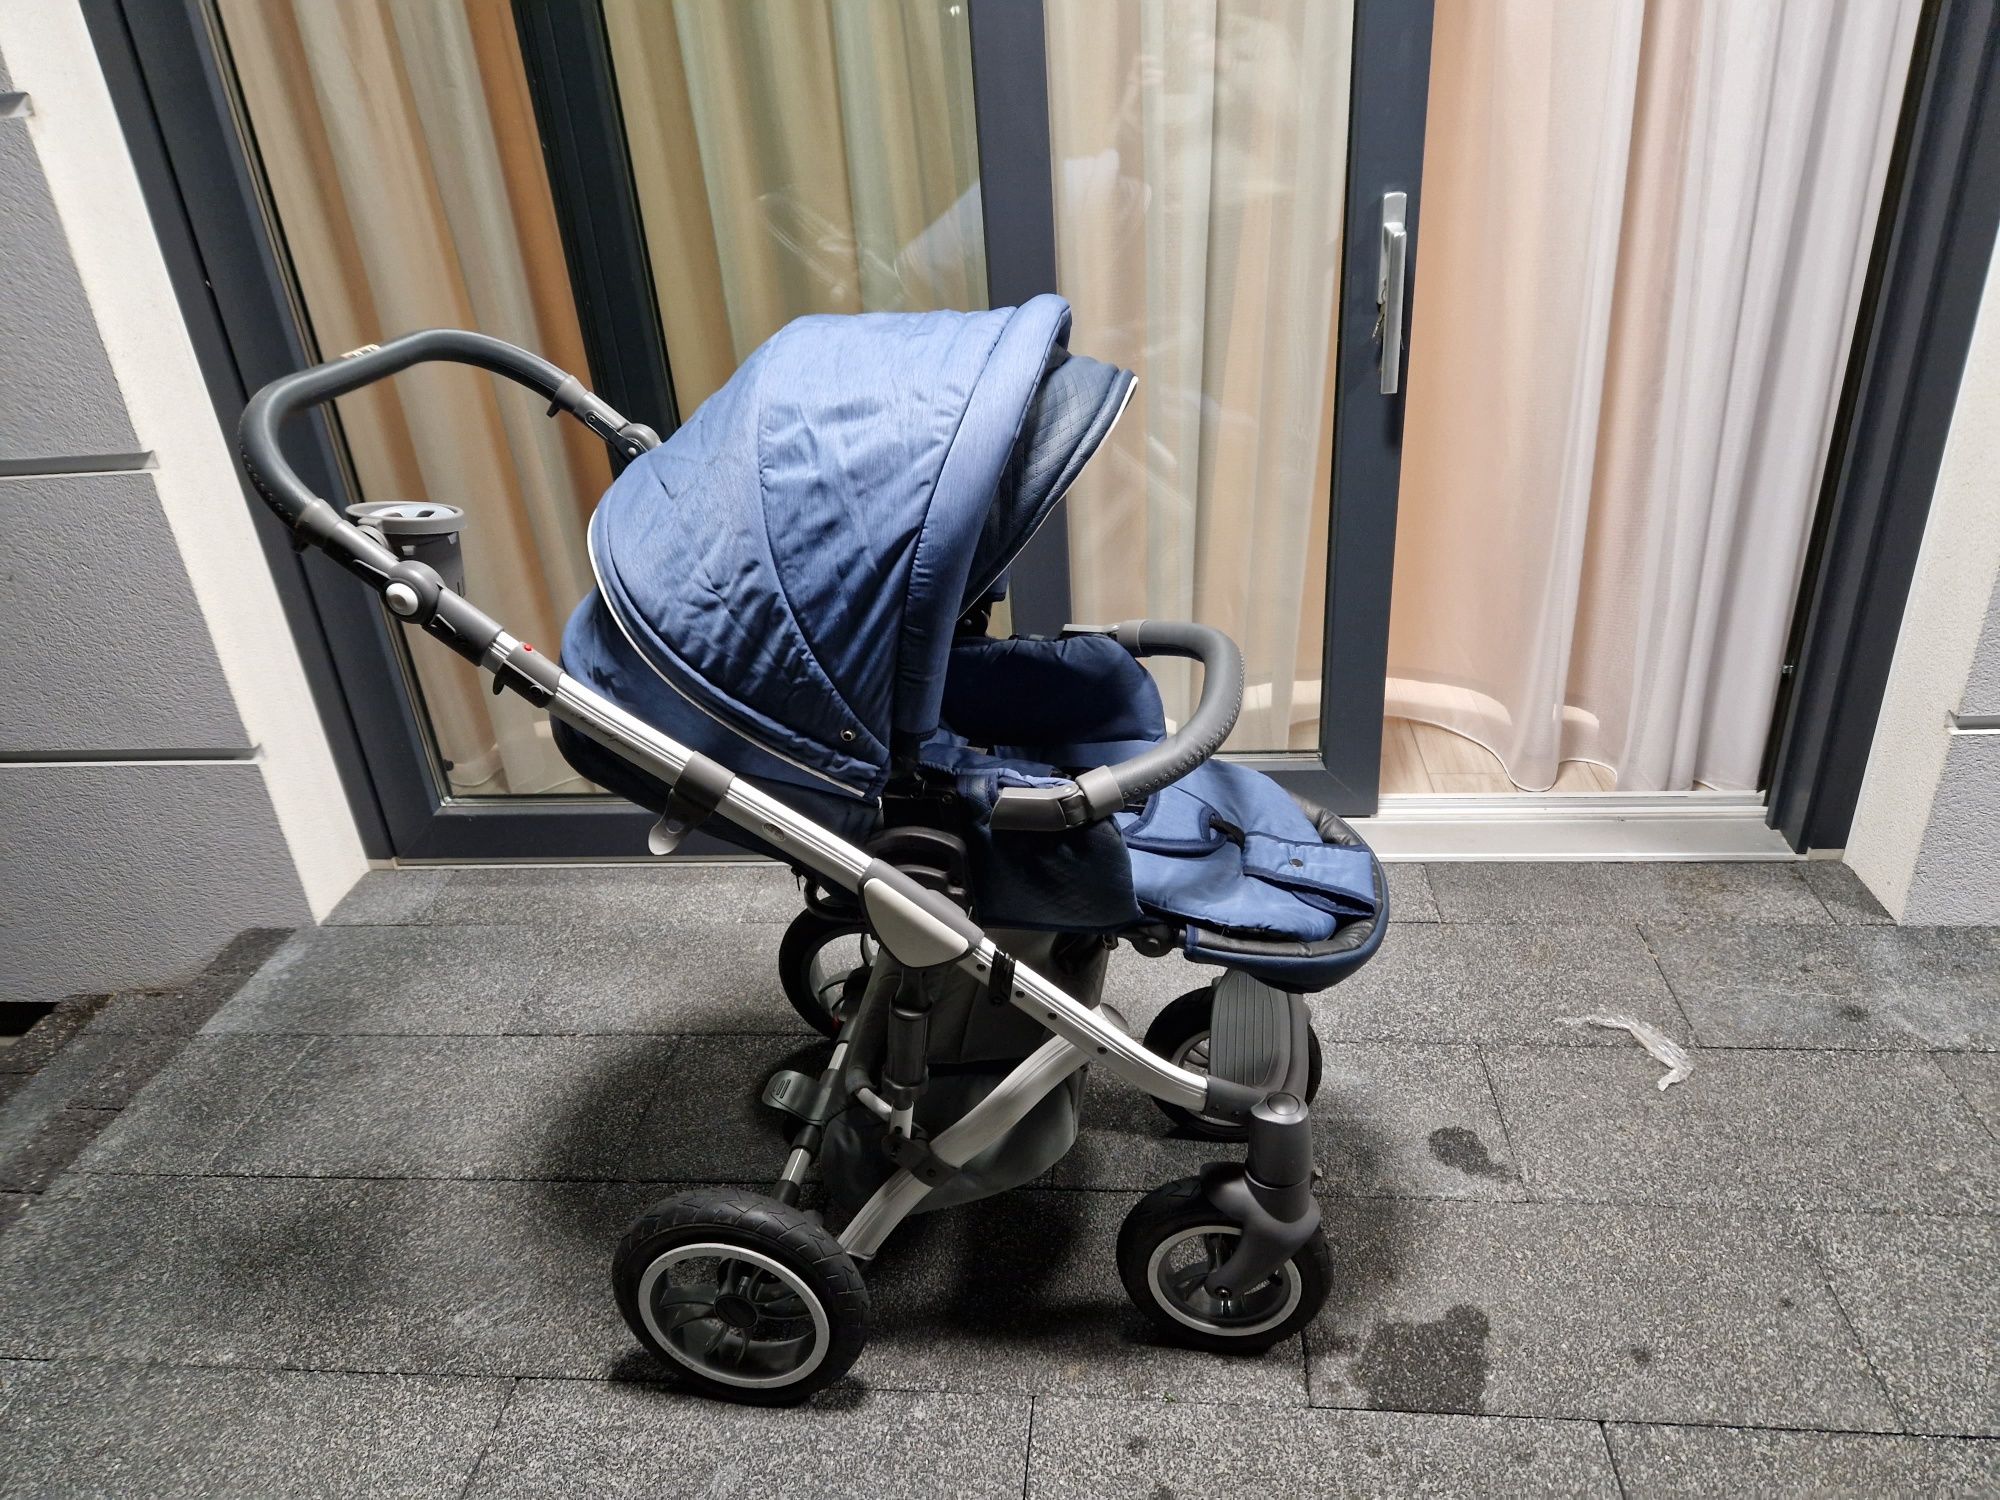 Wózek Baby Merc 3w1 (gondola, spacerówka, fotelik)